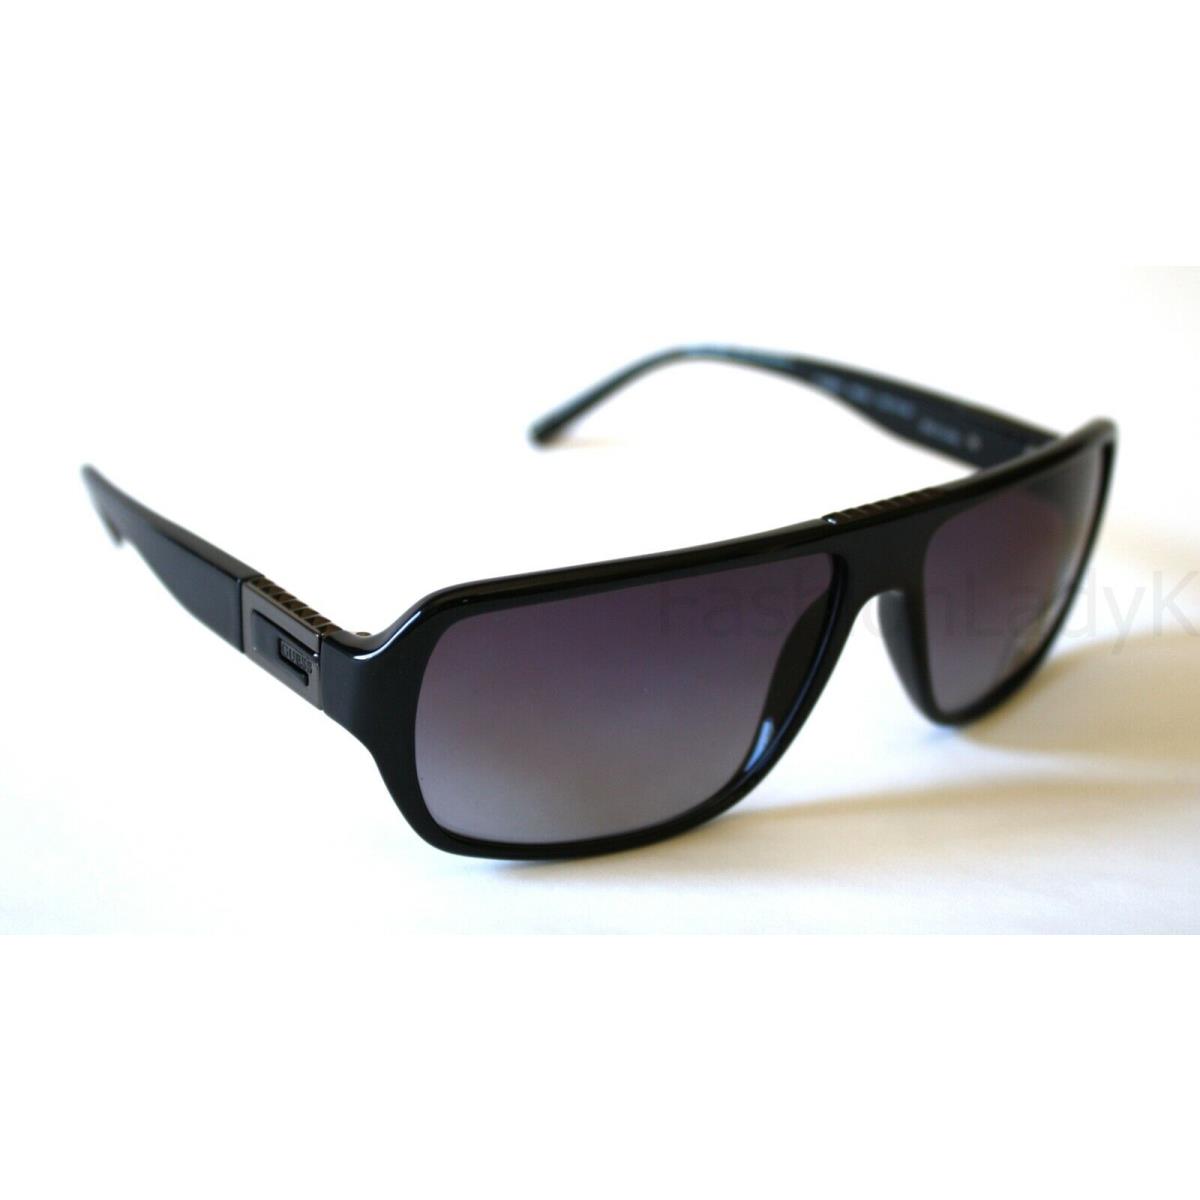 Guess sunglasses  - Black Frame